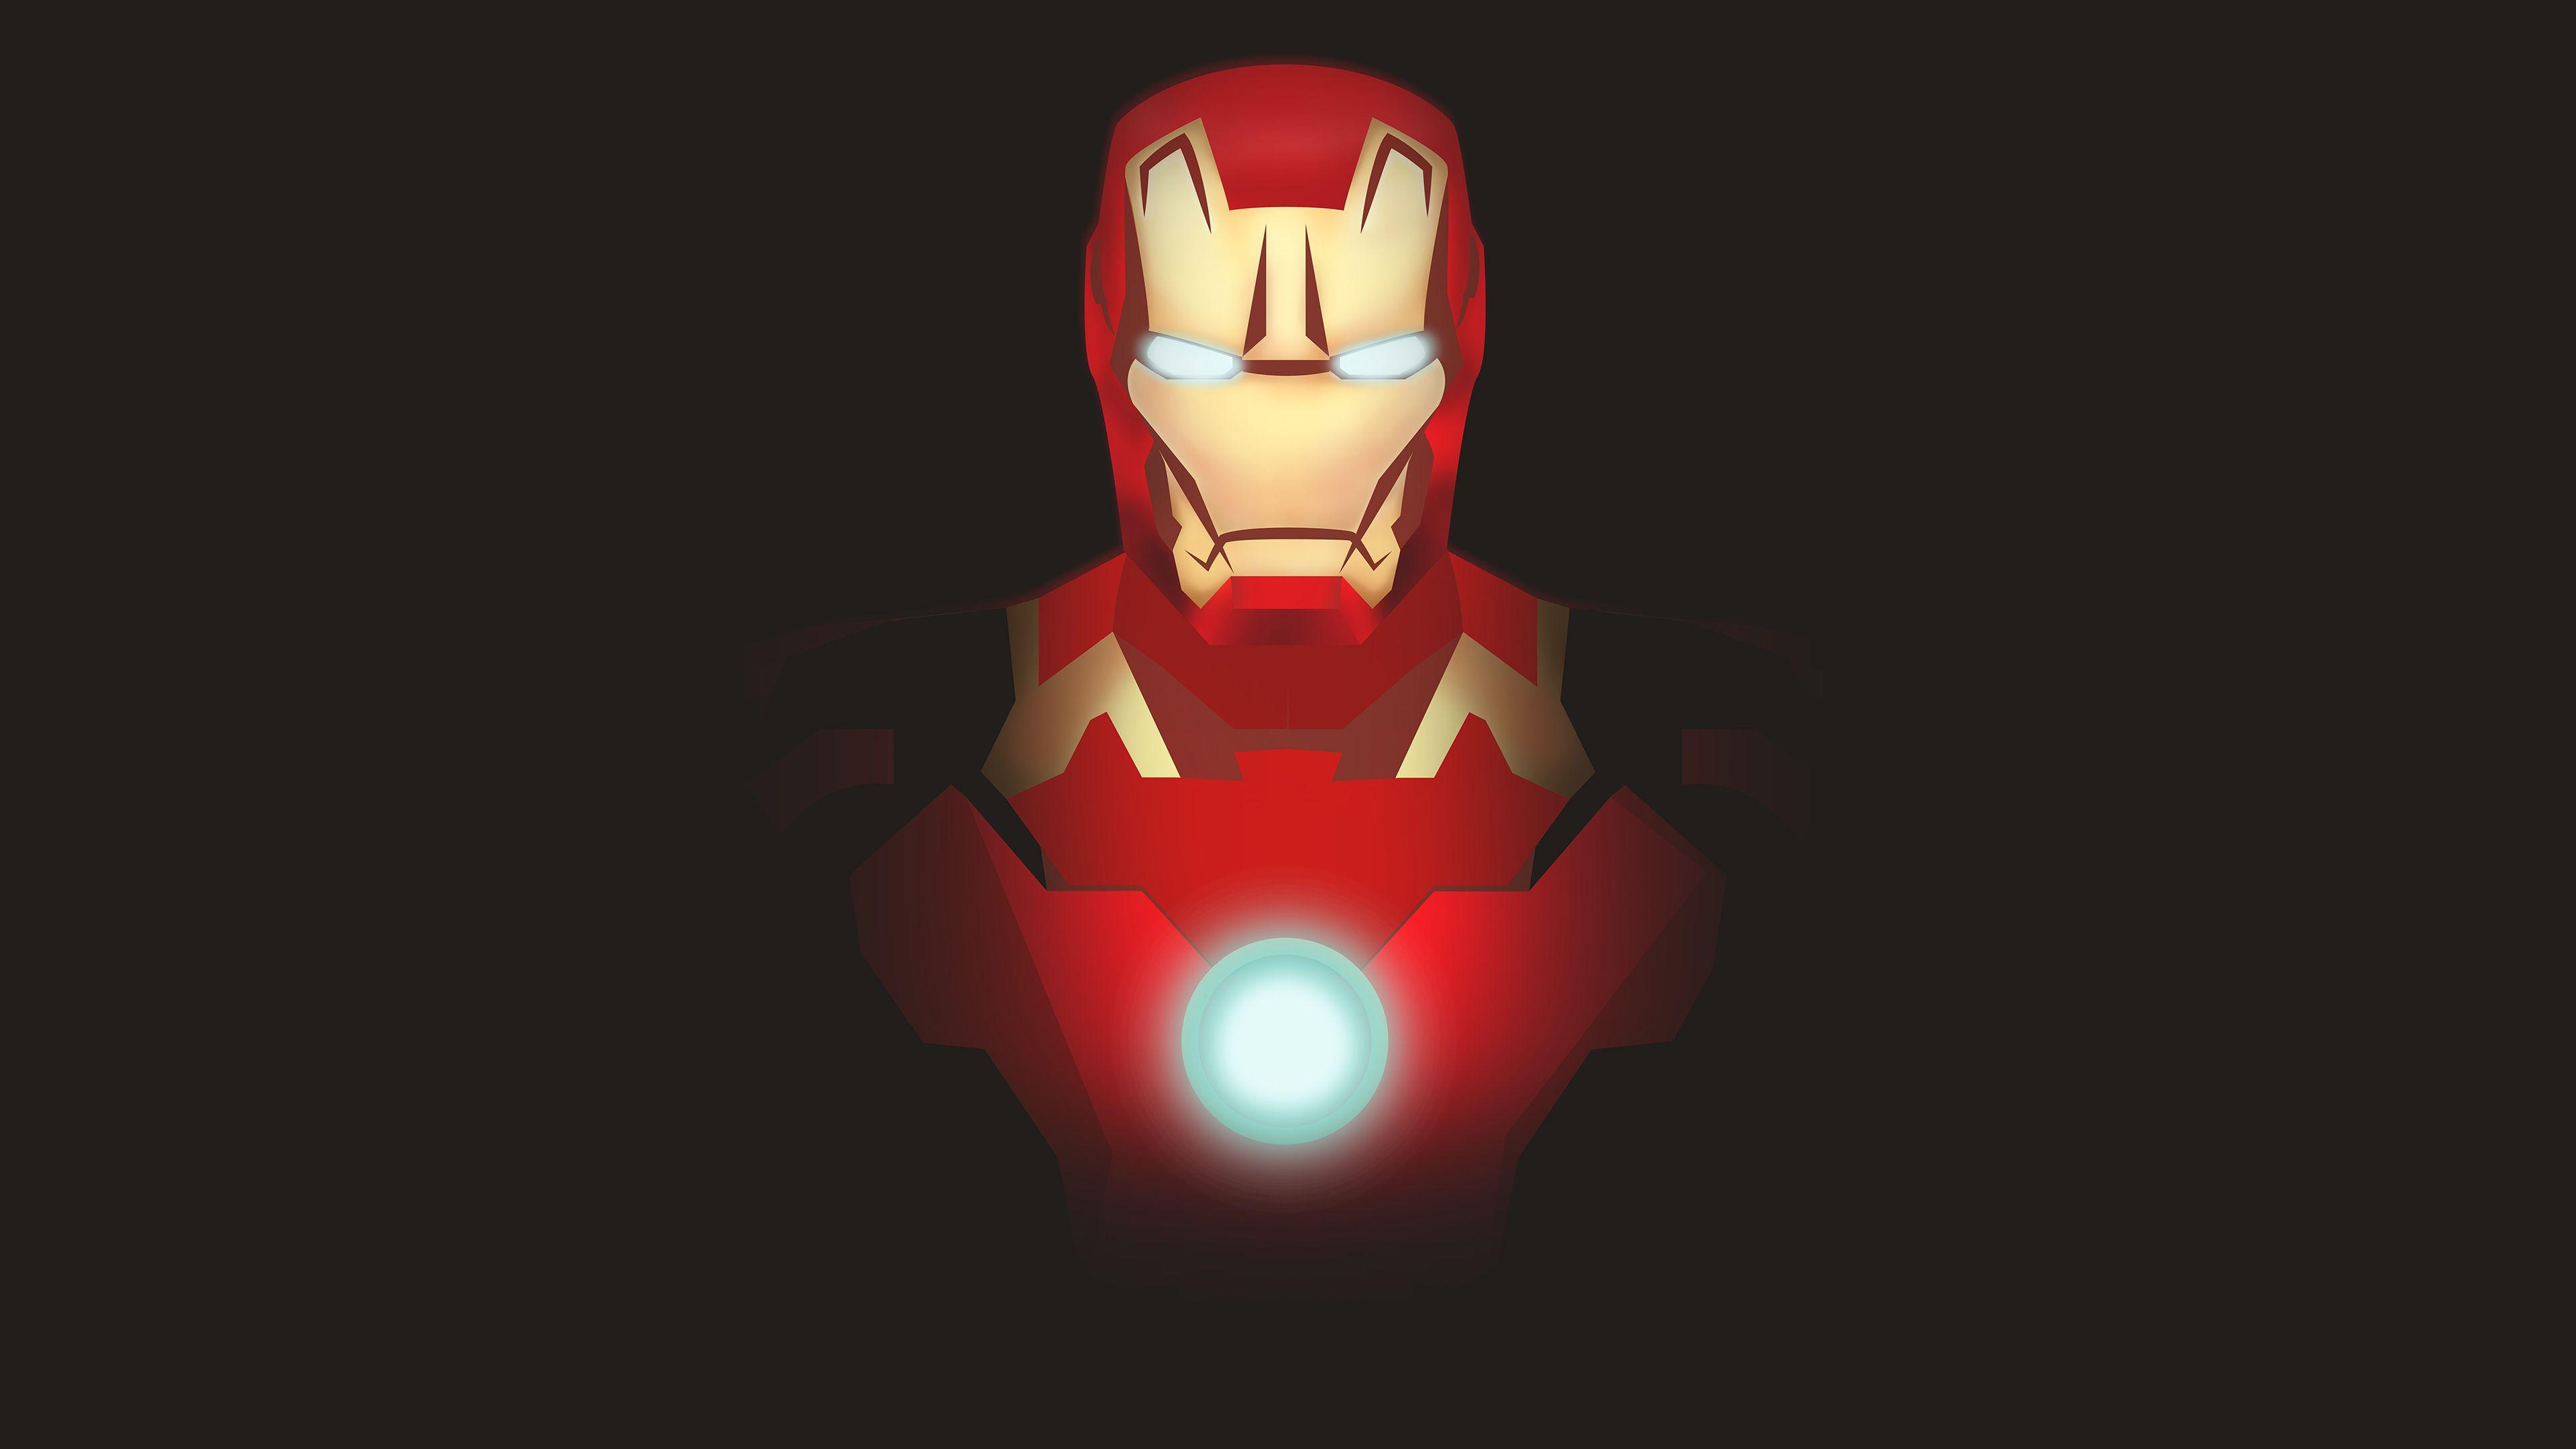 Iron Man Illustration superheroes wallpaper, iron man wallpaper, hd- wallpaper, digital art wallpaper, behance. Iron man wallpaper, Iron man, Man illustration